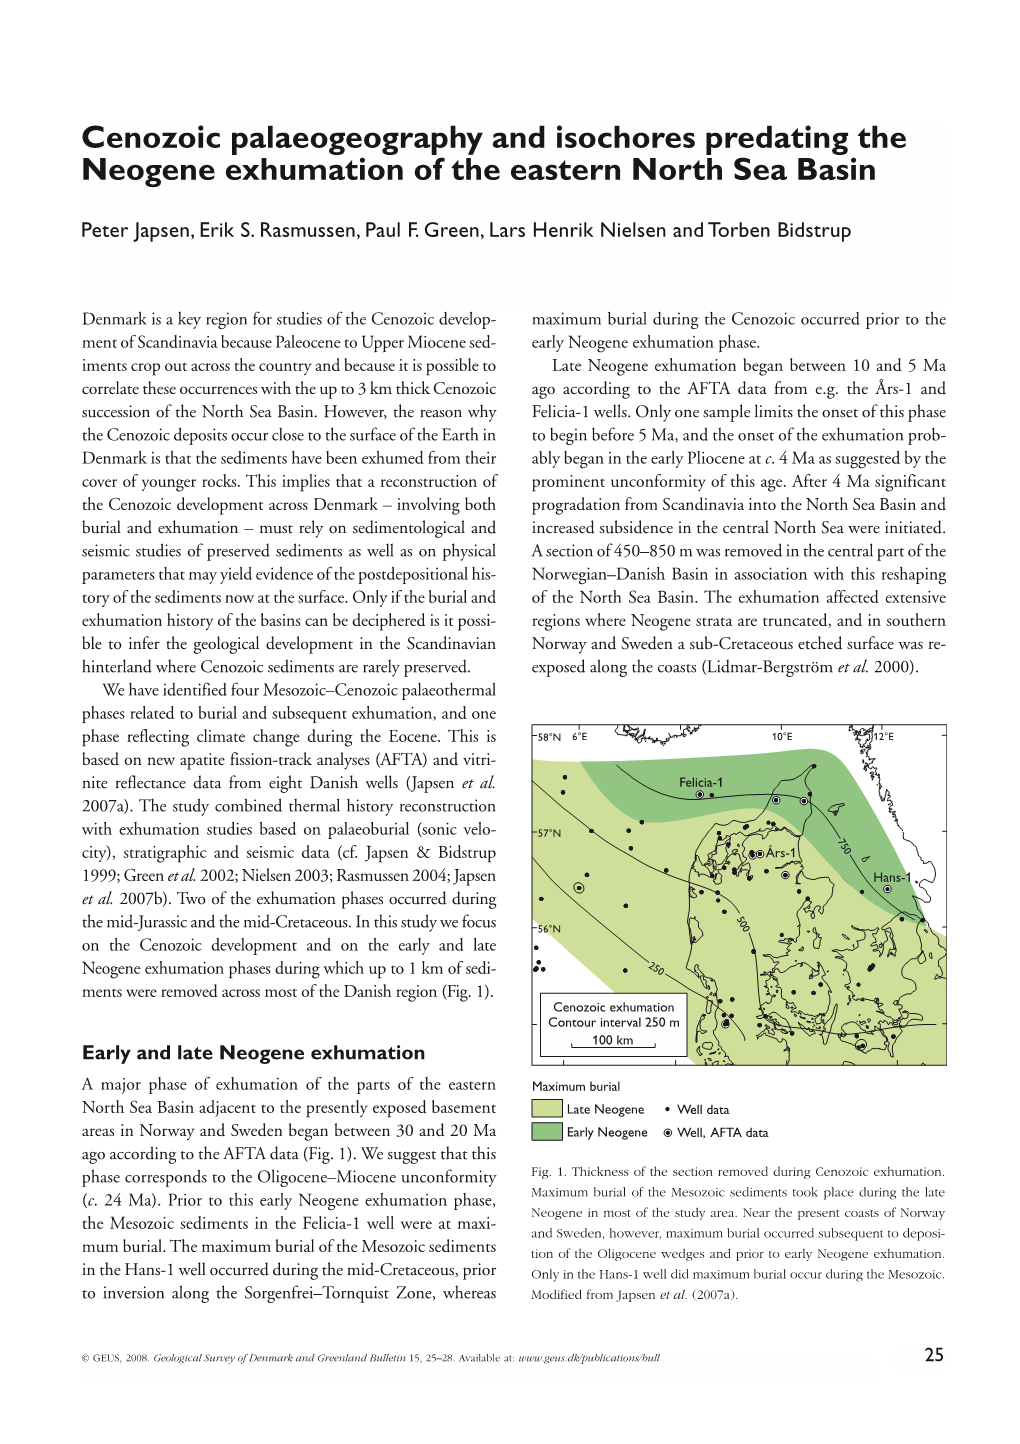 Cenozoic Palaeogeography and Isochores Predating the Neogene Exhumation of the Eastern North Sea Basin